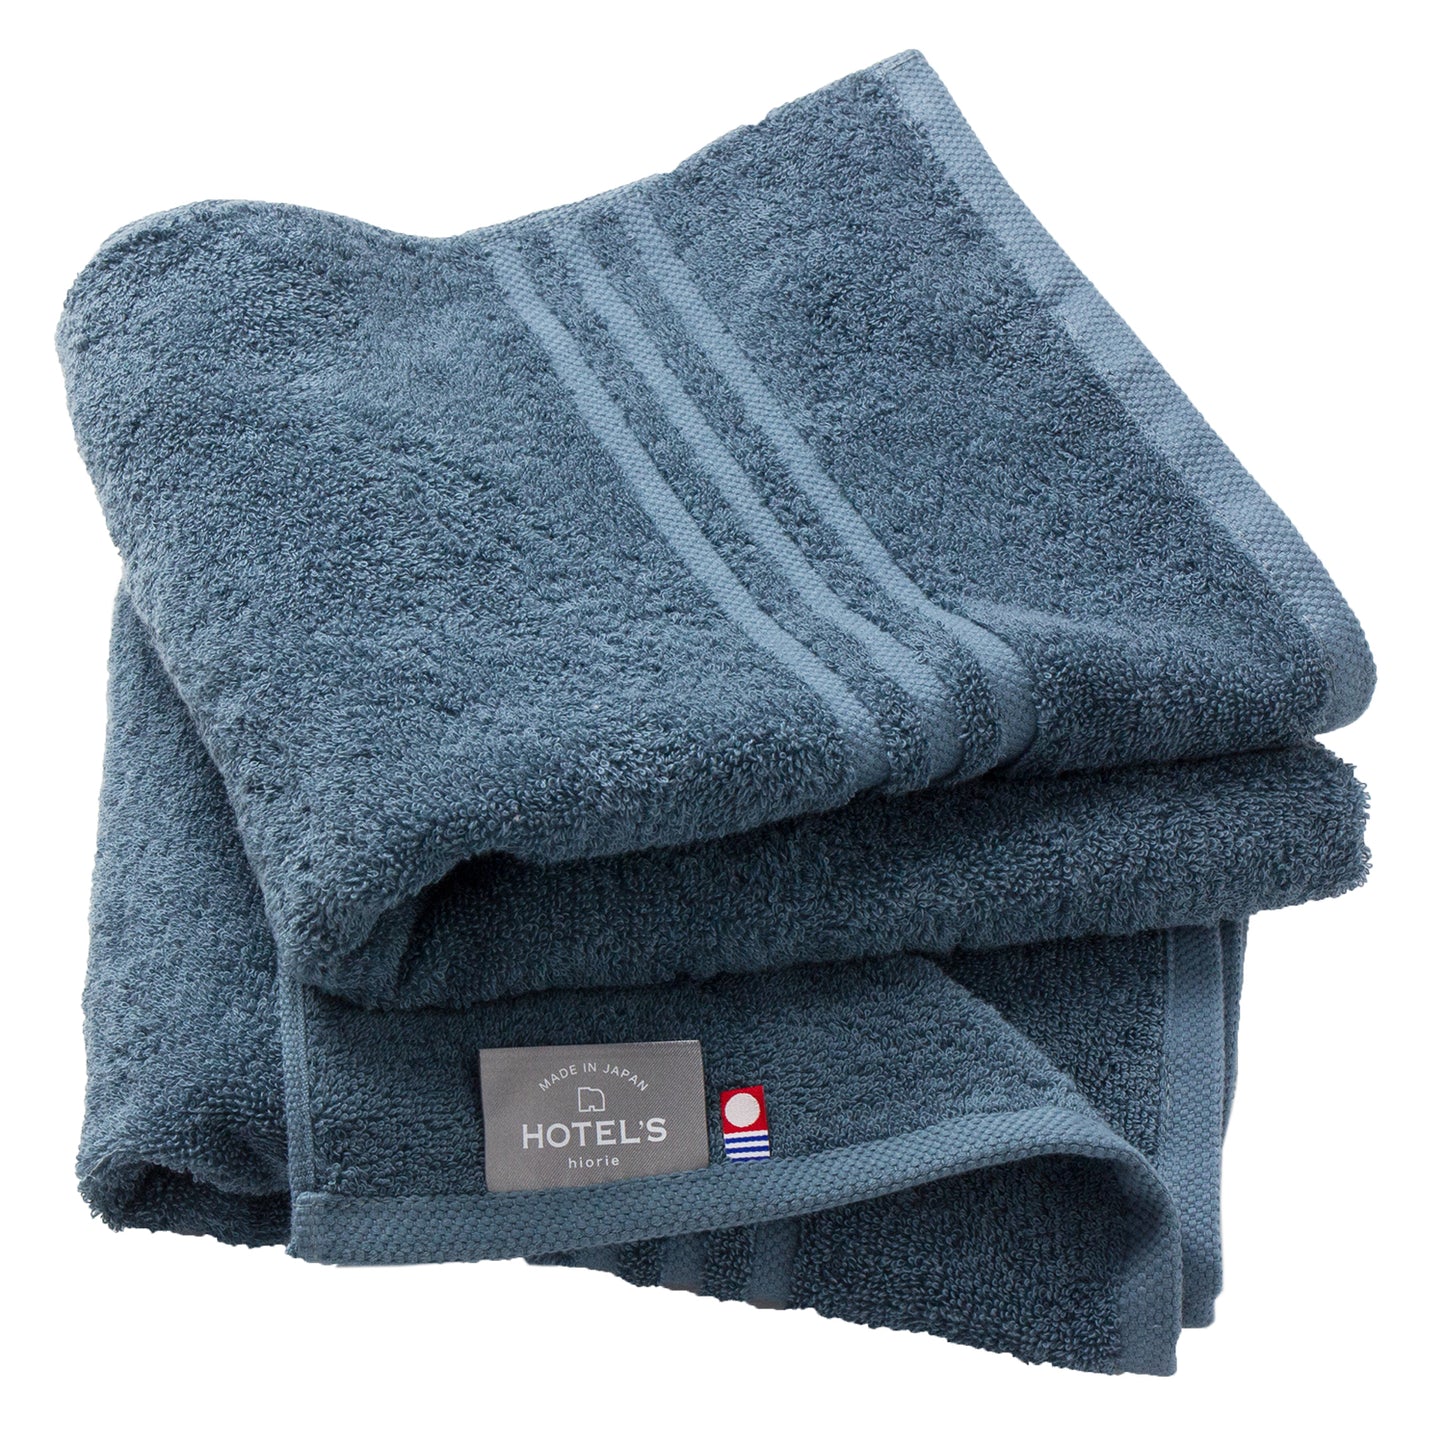 Hiorie Imabari Towel Soft Hotel's Fluffy Mini Bath Towel 2 Sheets cotton Japan